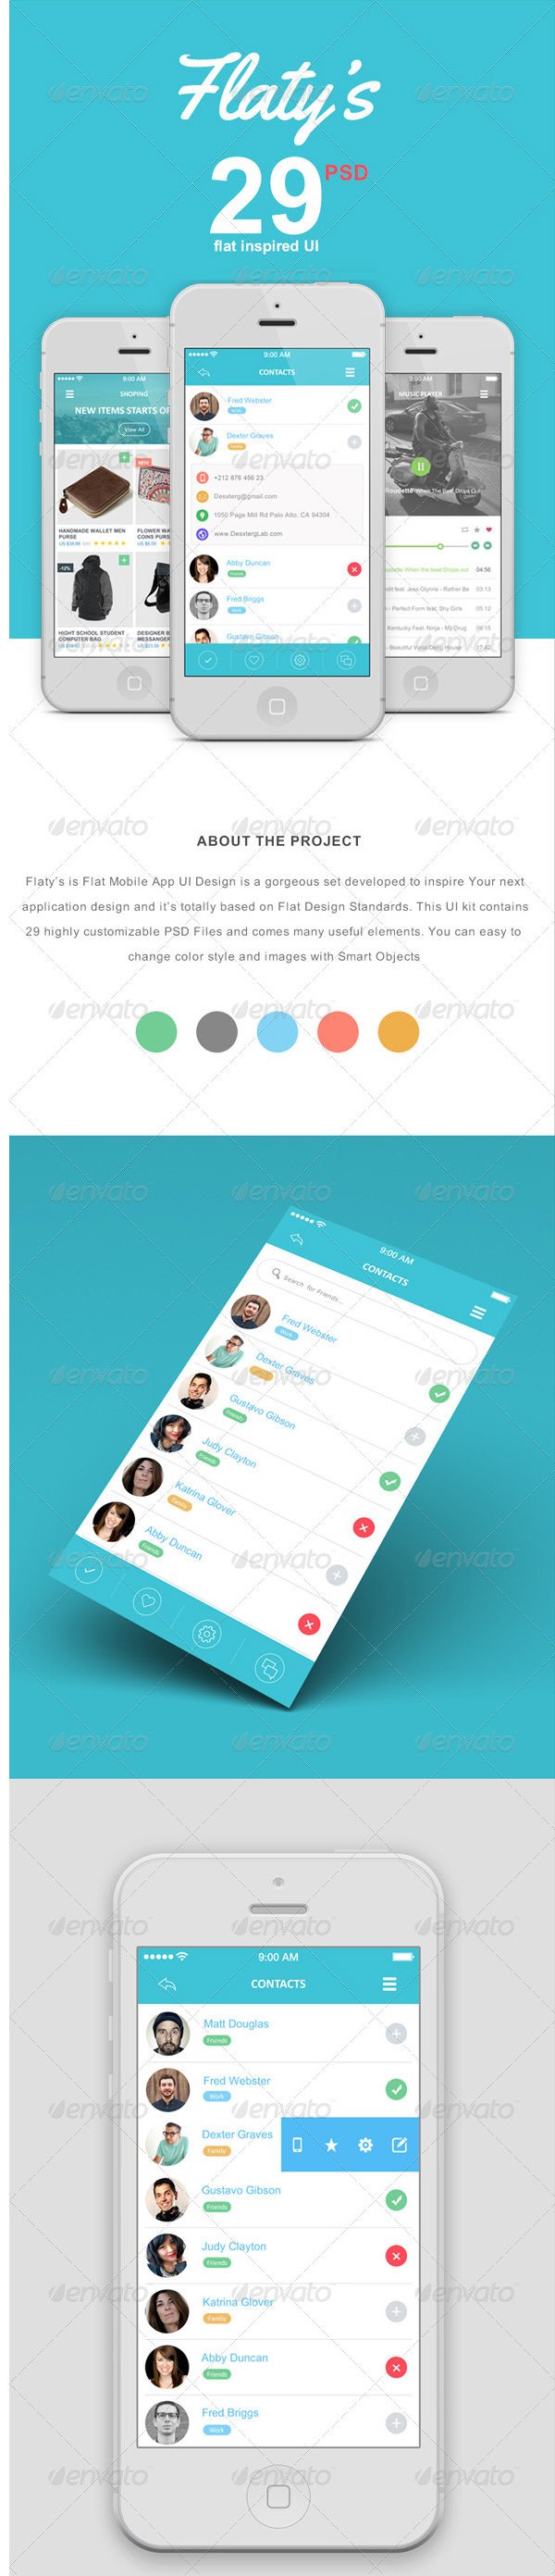 flat-mobile-app-ui-design